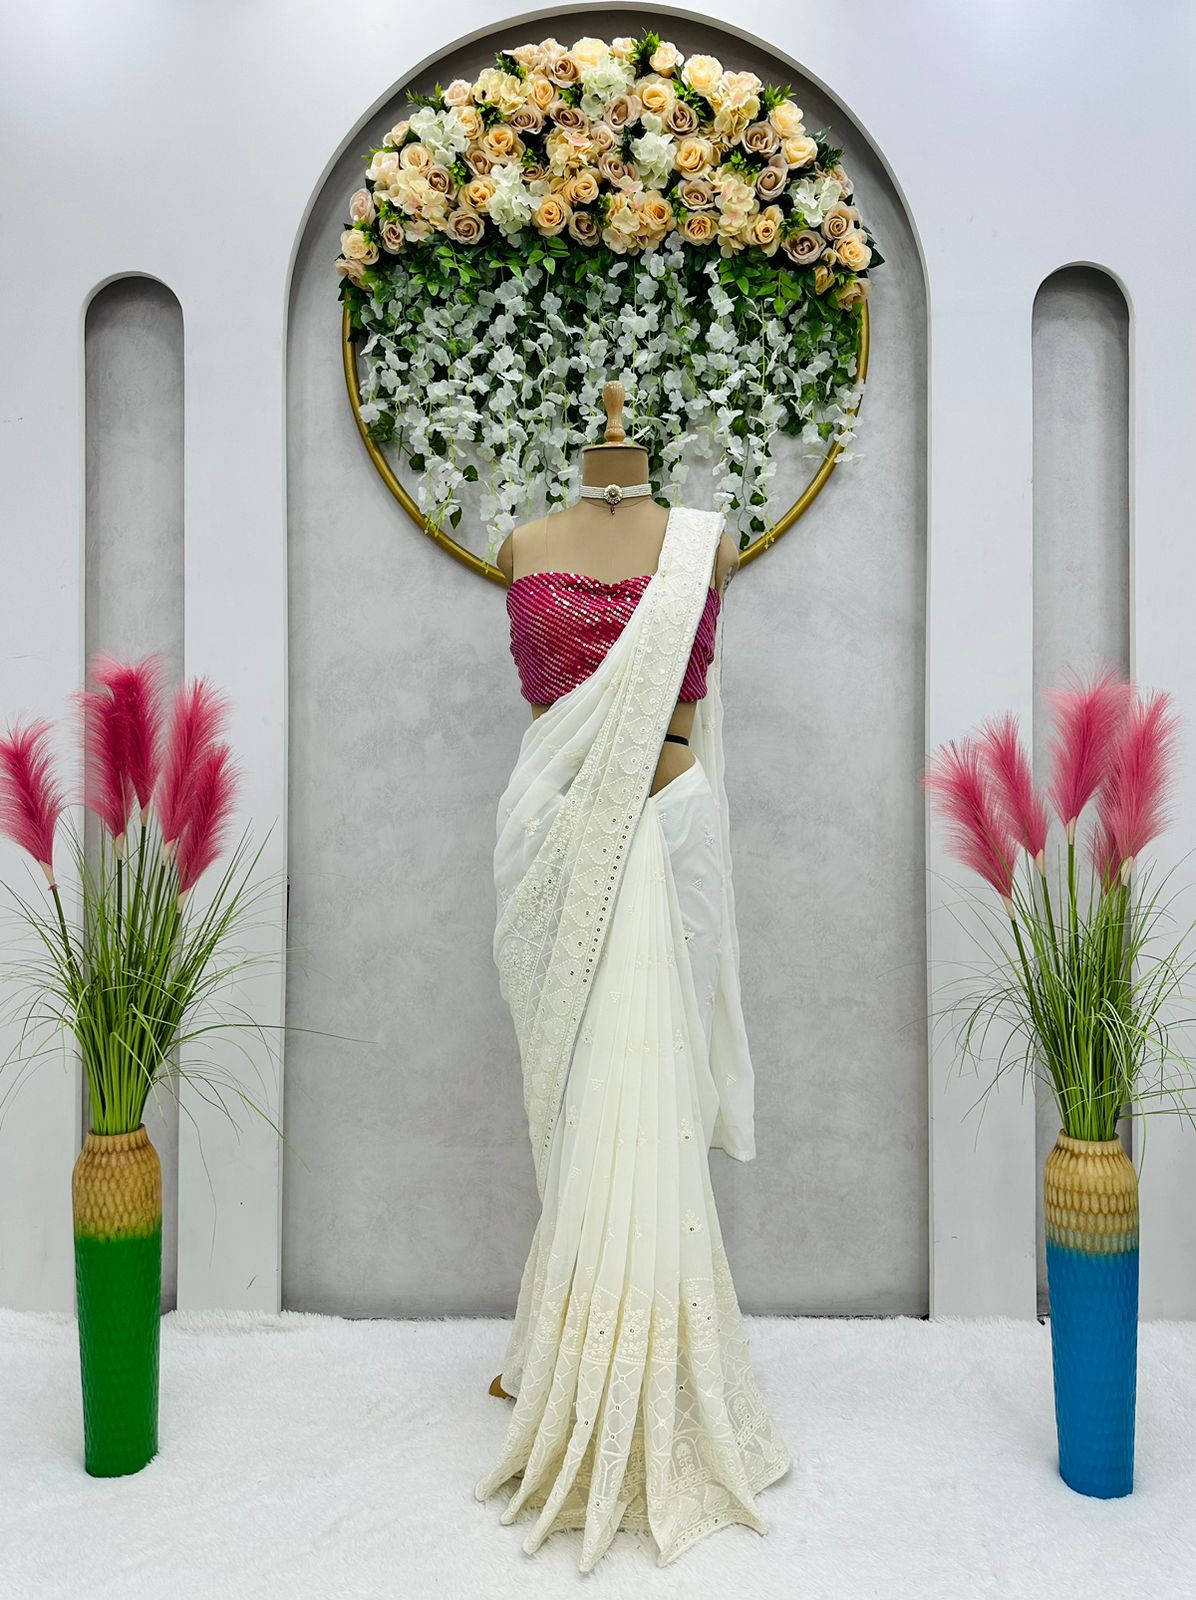 11 Latest Saree Designs for Wedding Photoshoots